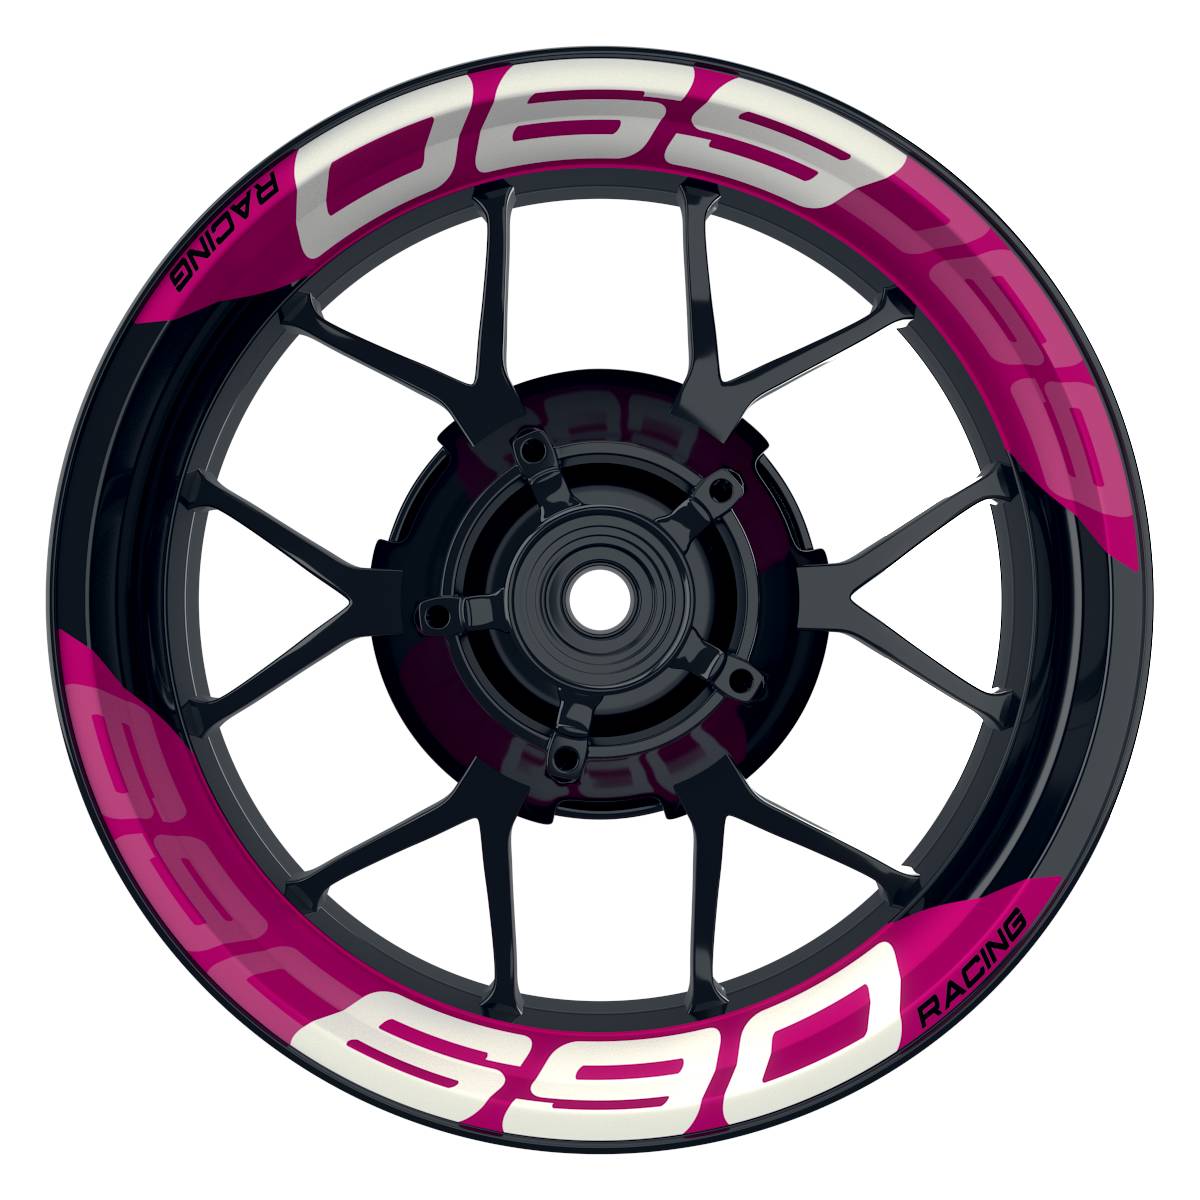 Wheelsticker Felgenaufkleber KTM Racing 690 einfarbig V2 pink Frontansicht